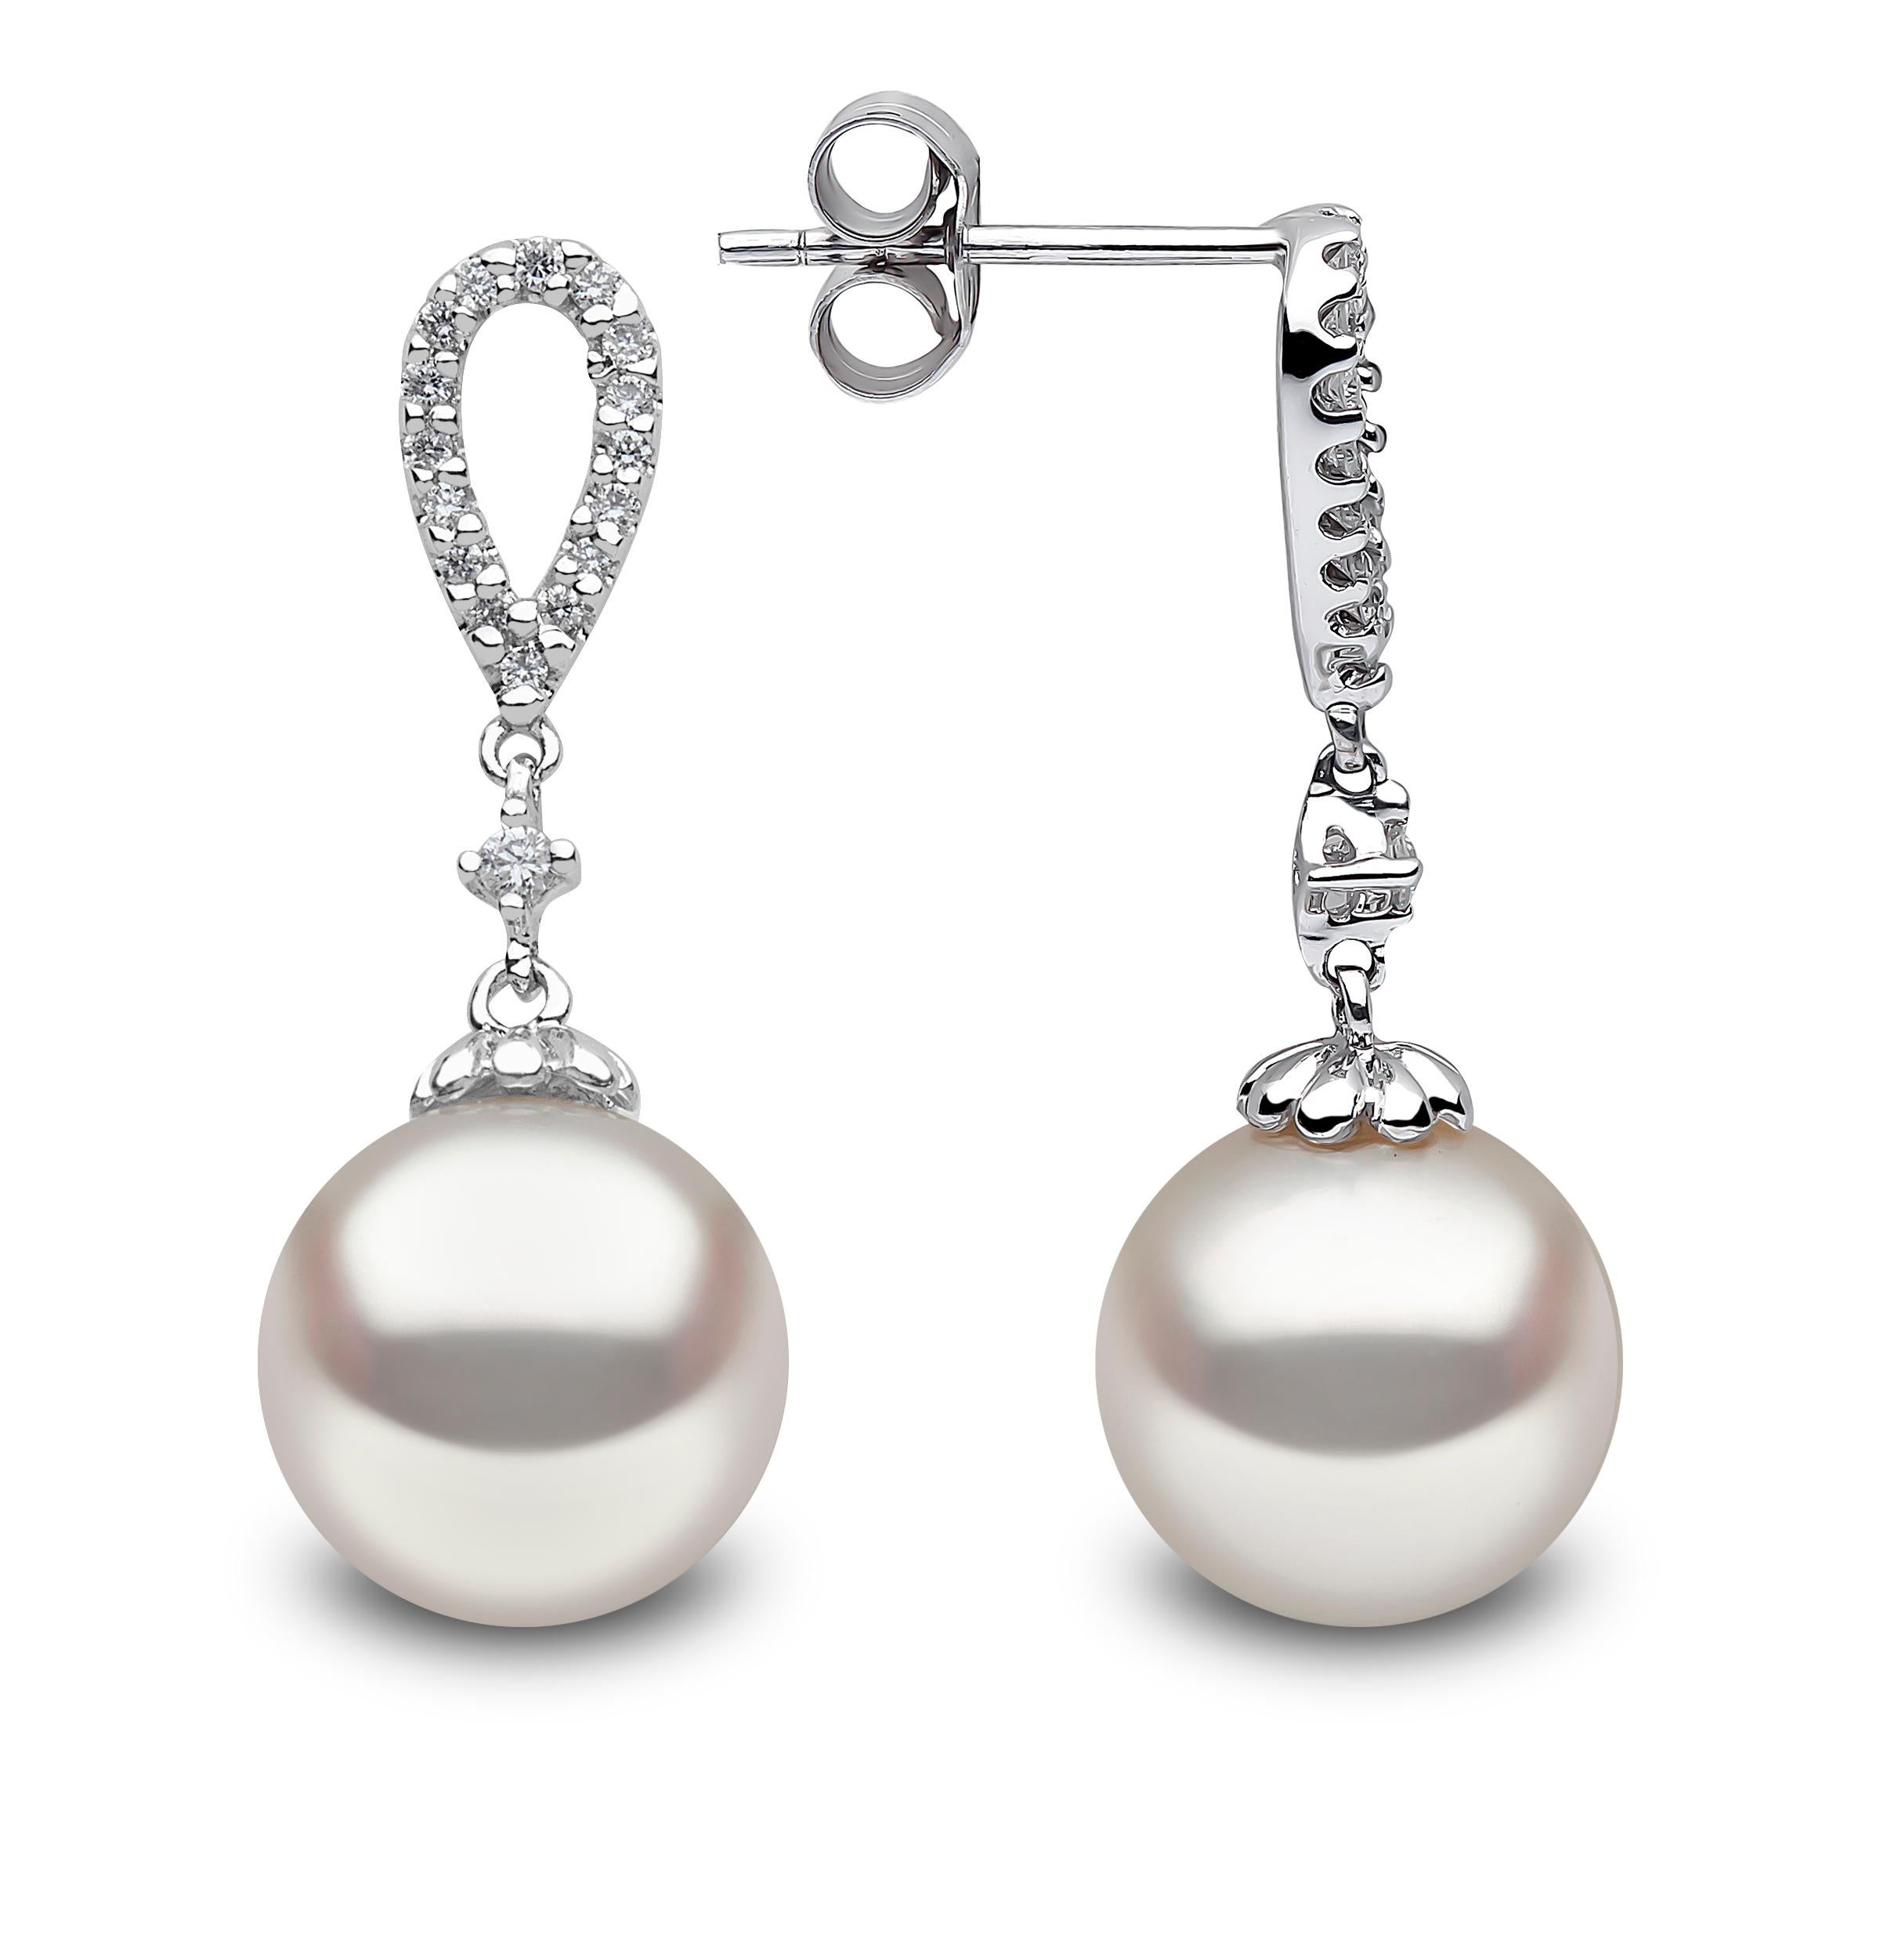 Modern Yoko London South Sea Pearl and Diamond Earrings in 18 Karat White Gold